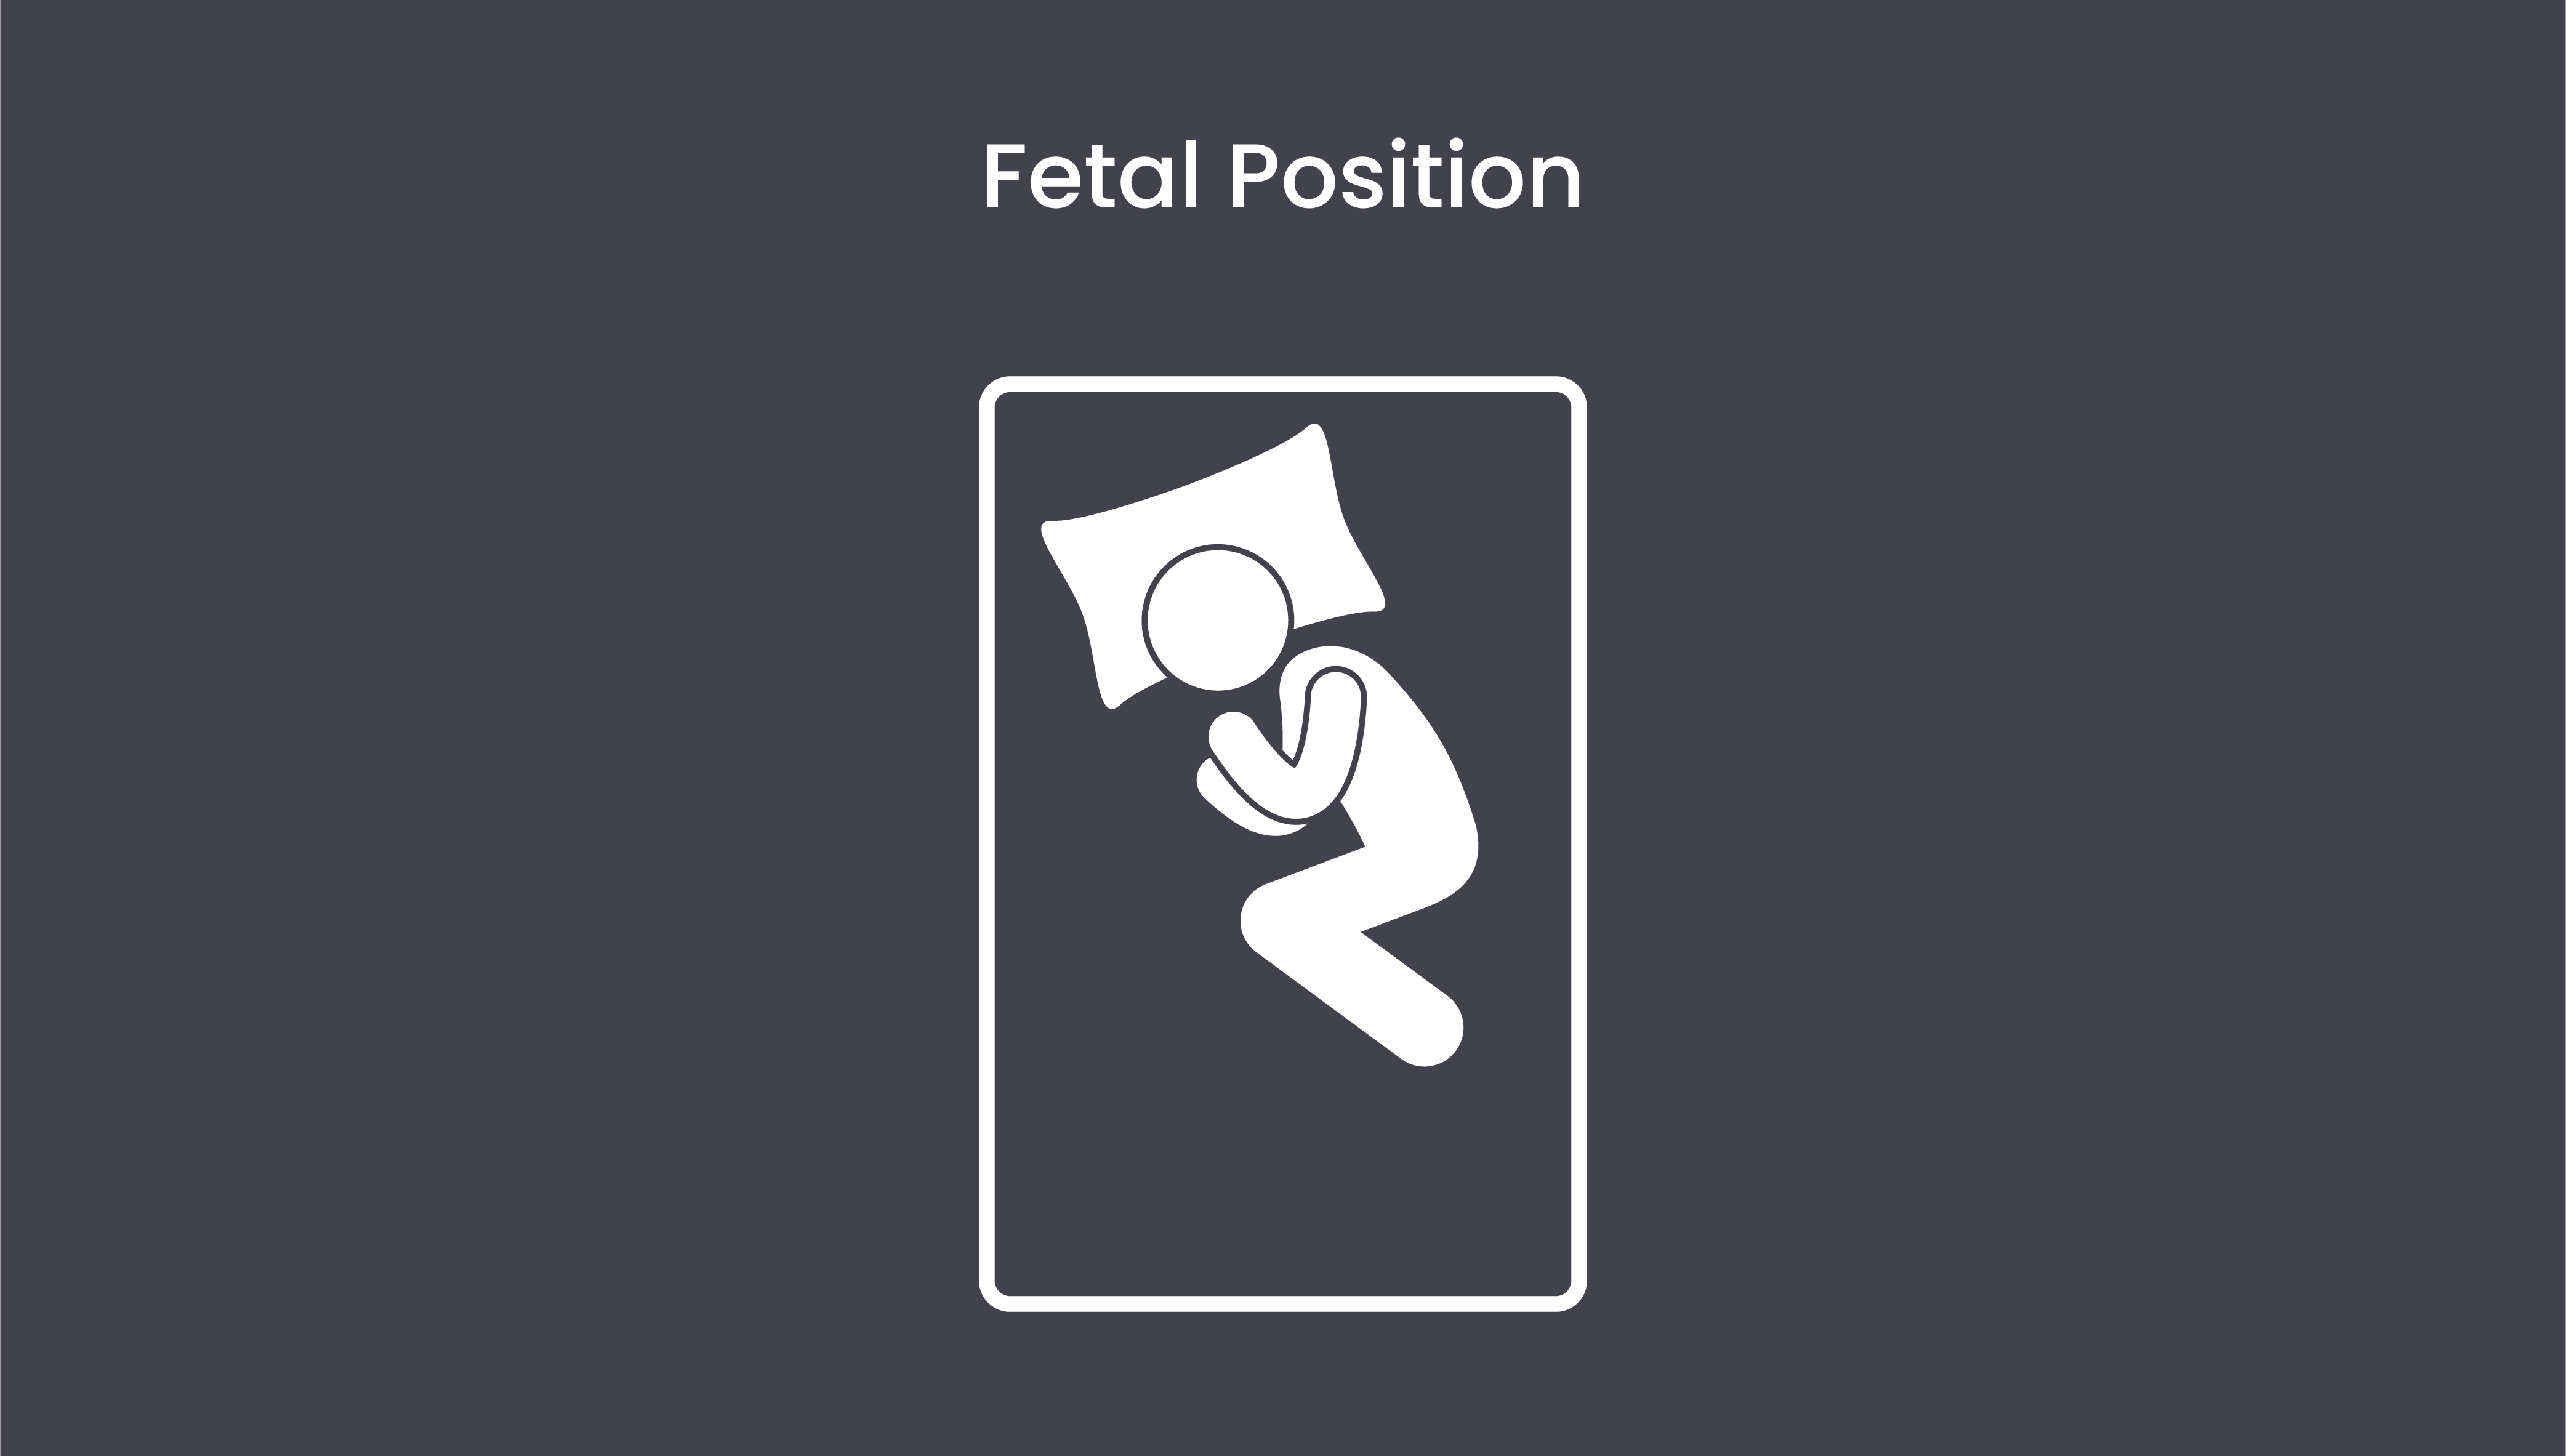 Fetal position